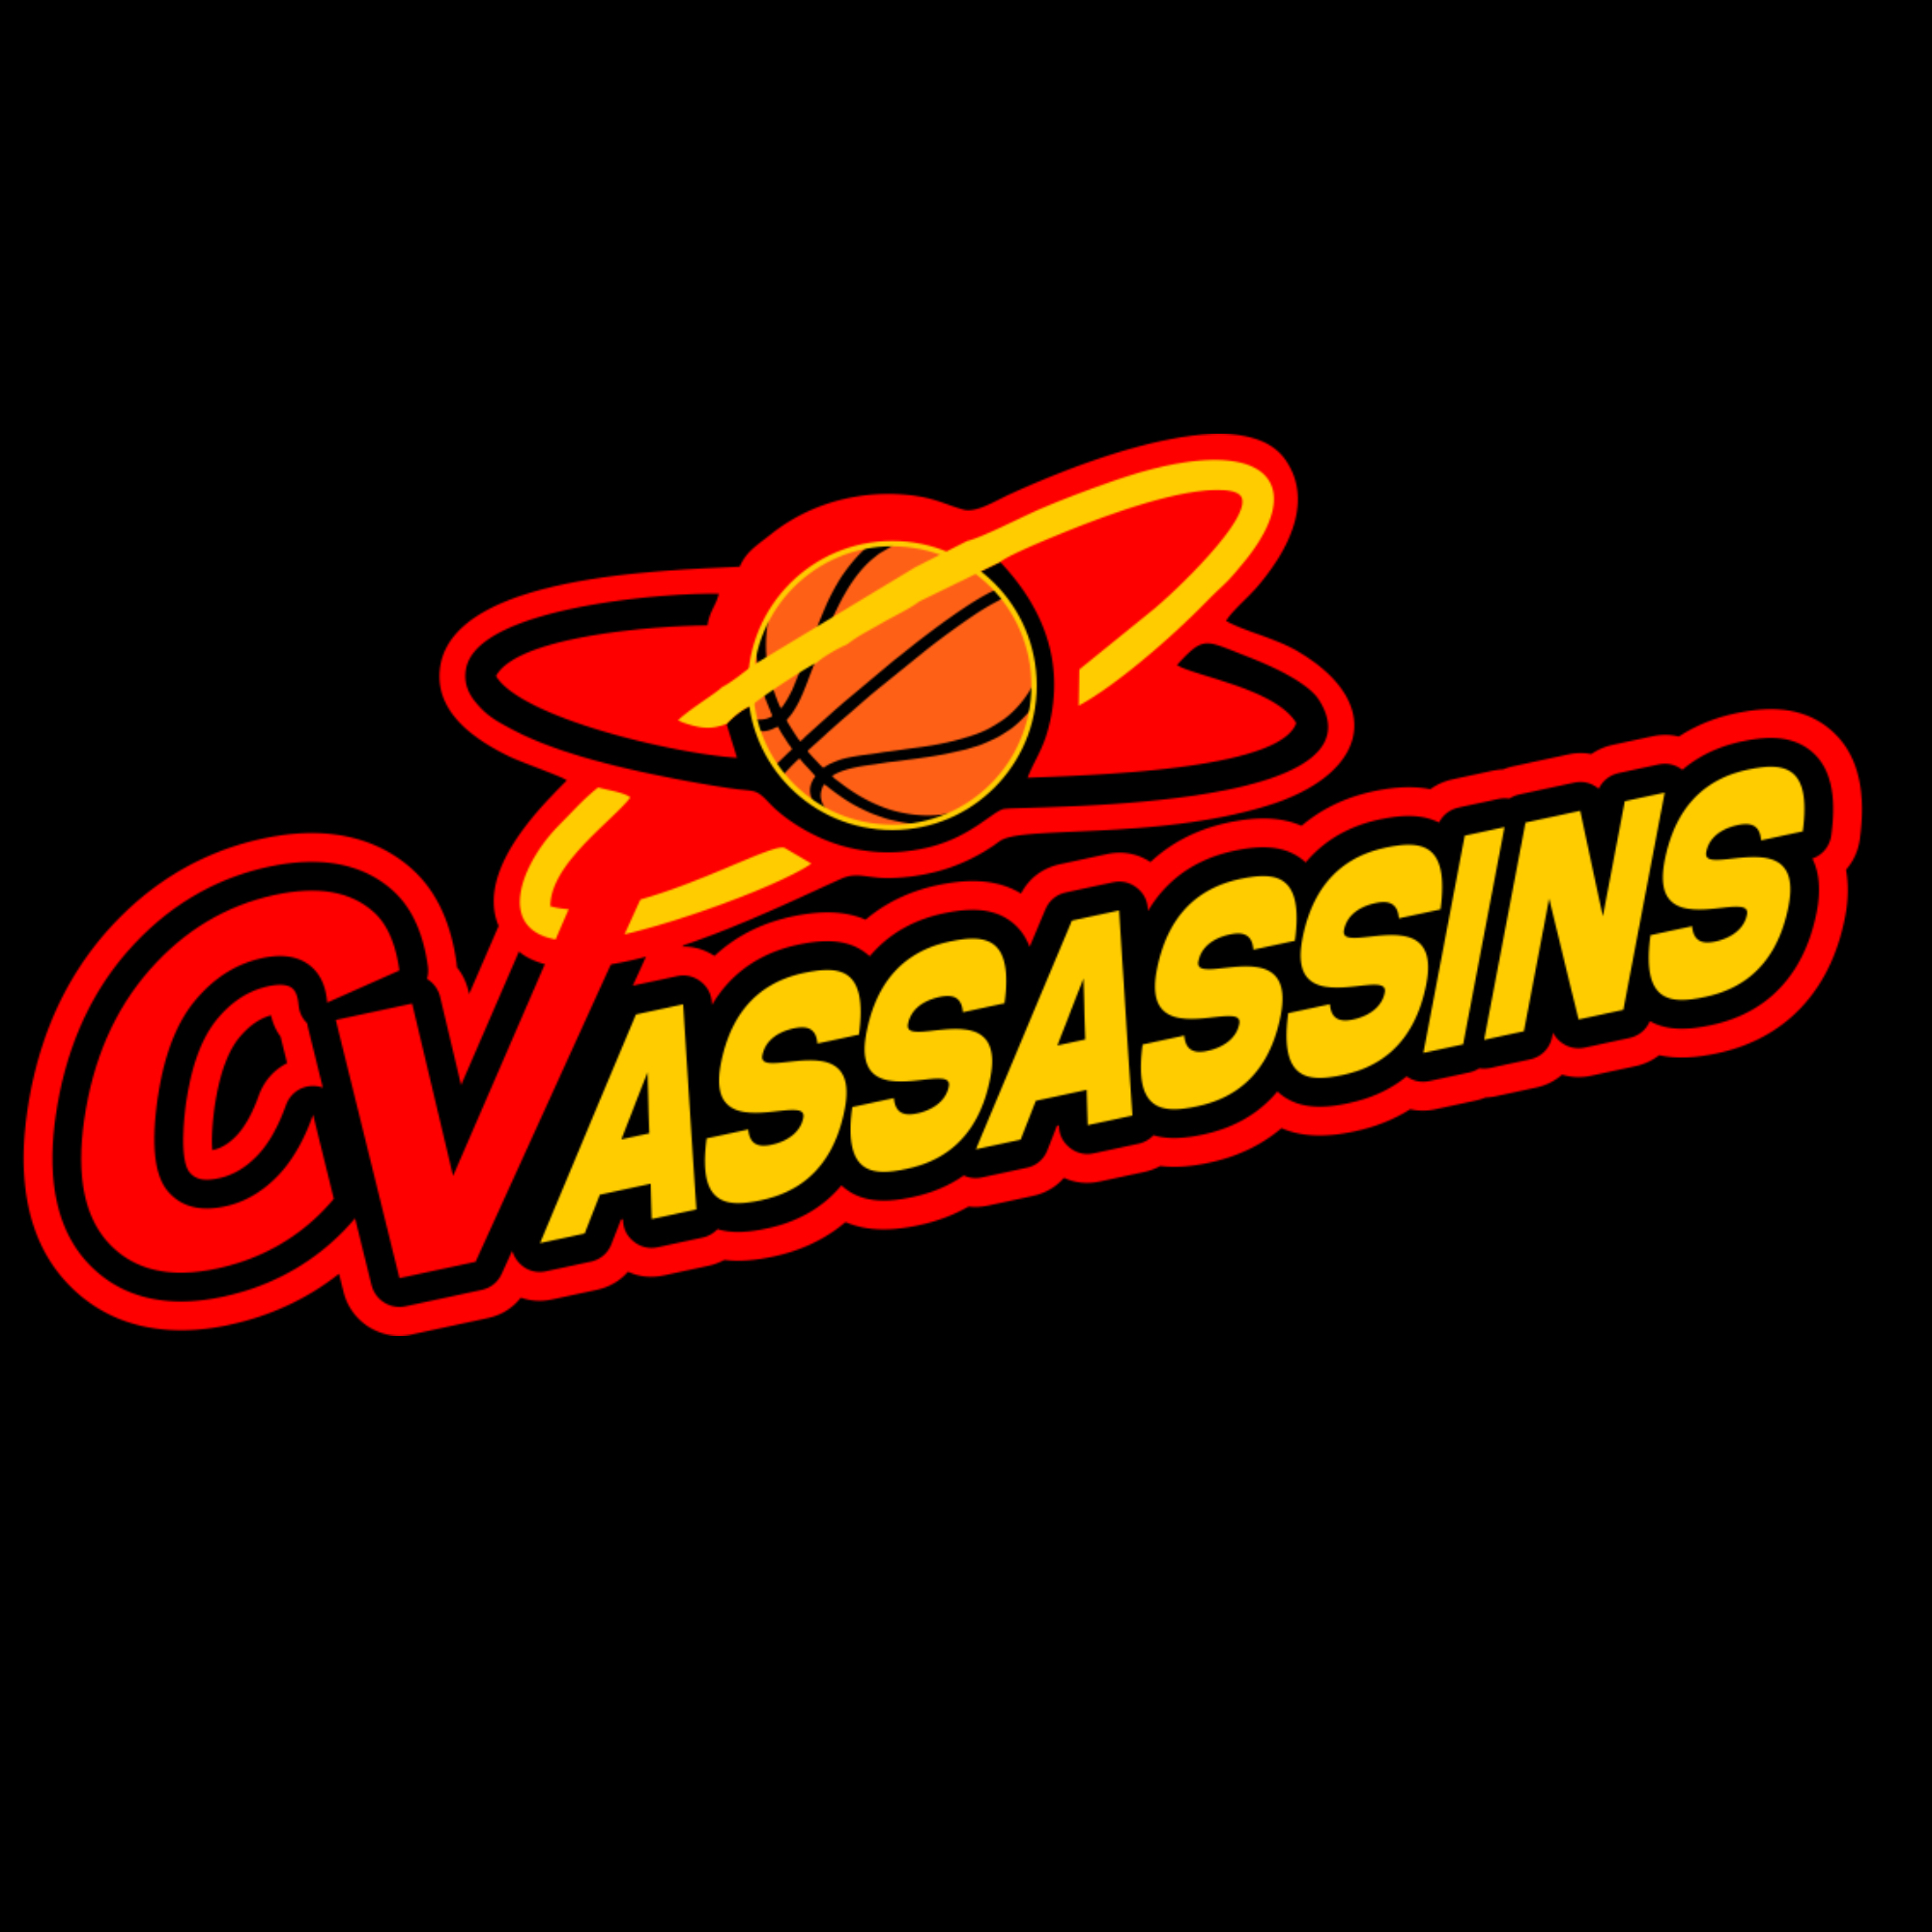 The official logo of CV ASSASSINS